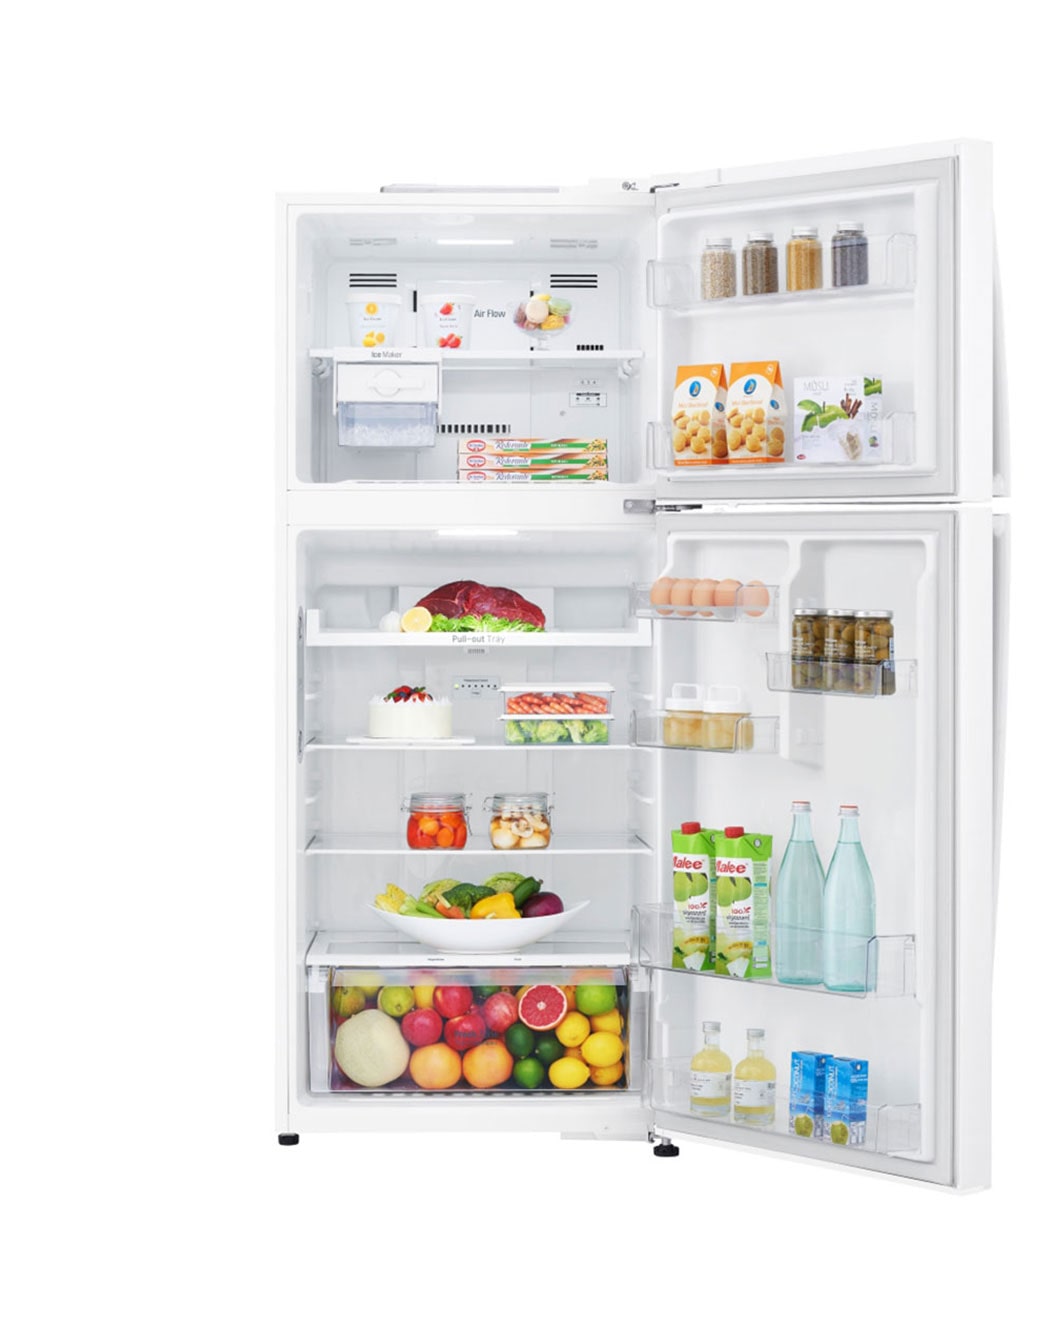 LG Refrigerator 471 Liter Smart Inverter Top Freezer - White